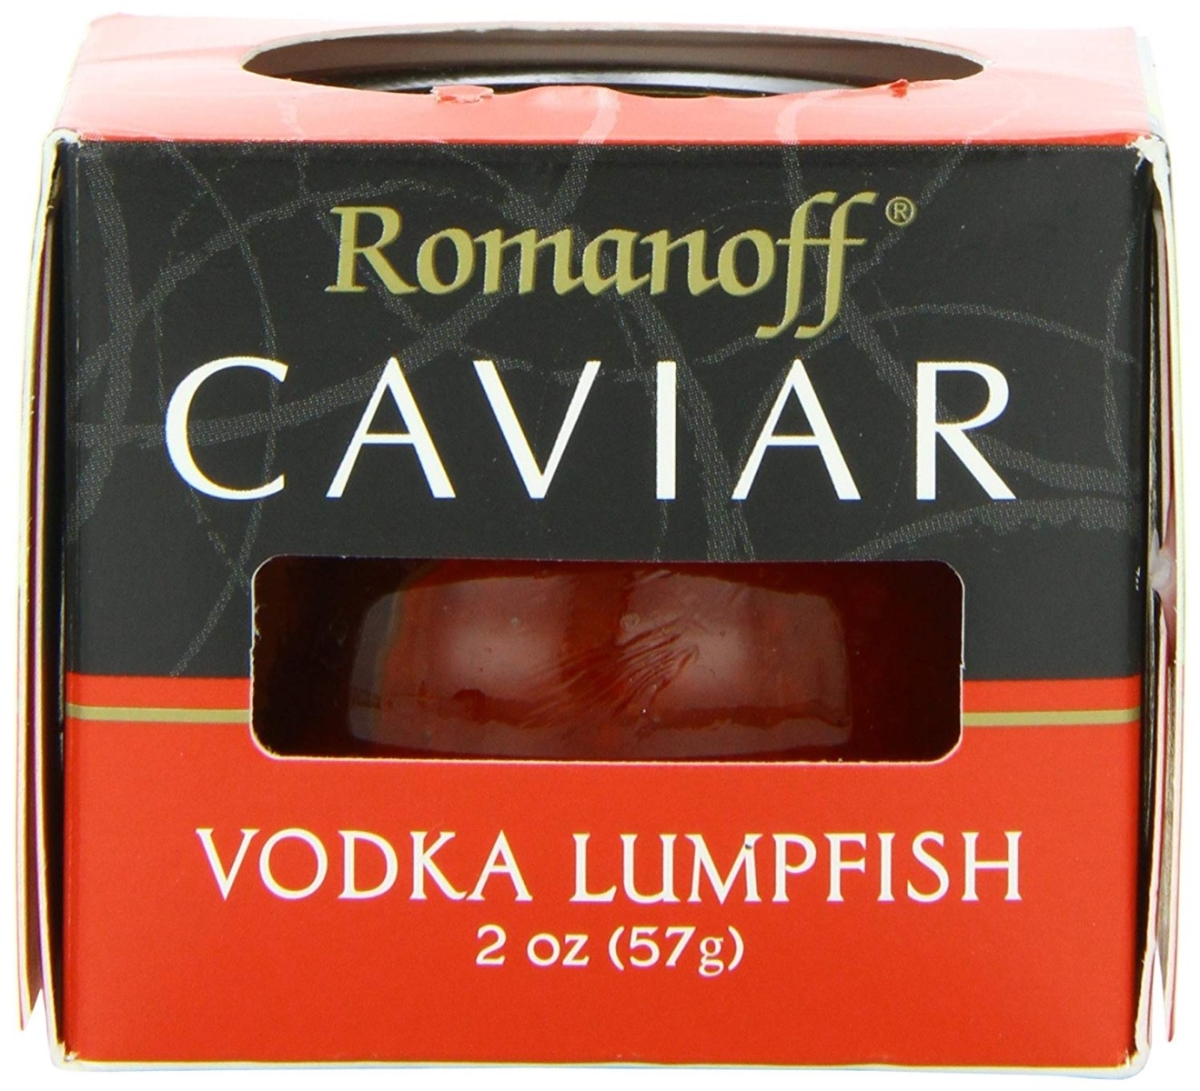 Picture of Romanoff KHLV00011090 Red Vodka Lumpfish Caviar, 2 oz